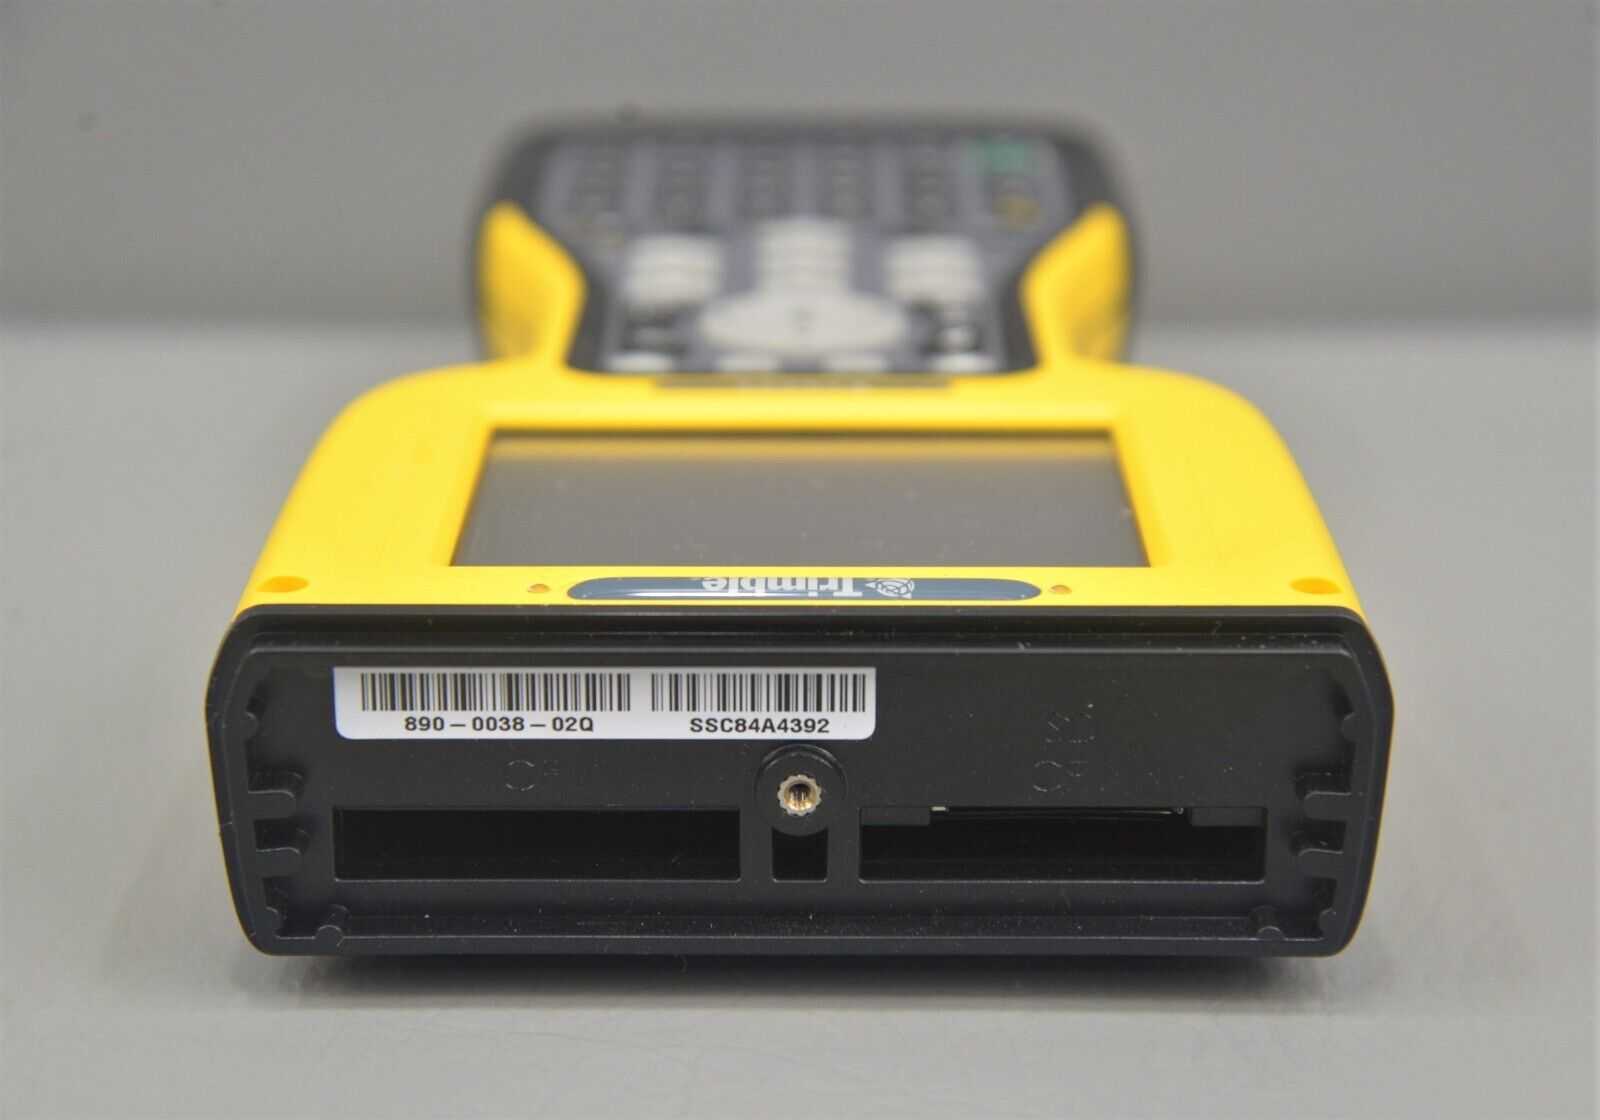 TDS Ranger X Series Handheld Field Computer Data Collector Gray